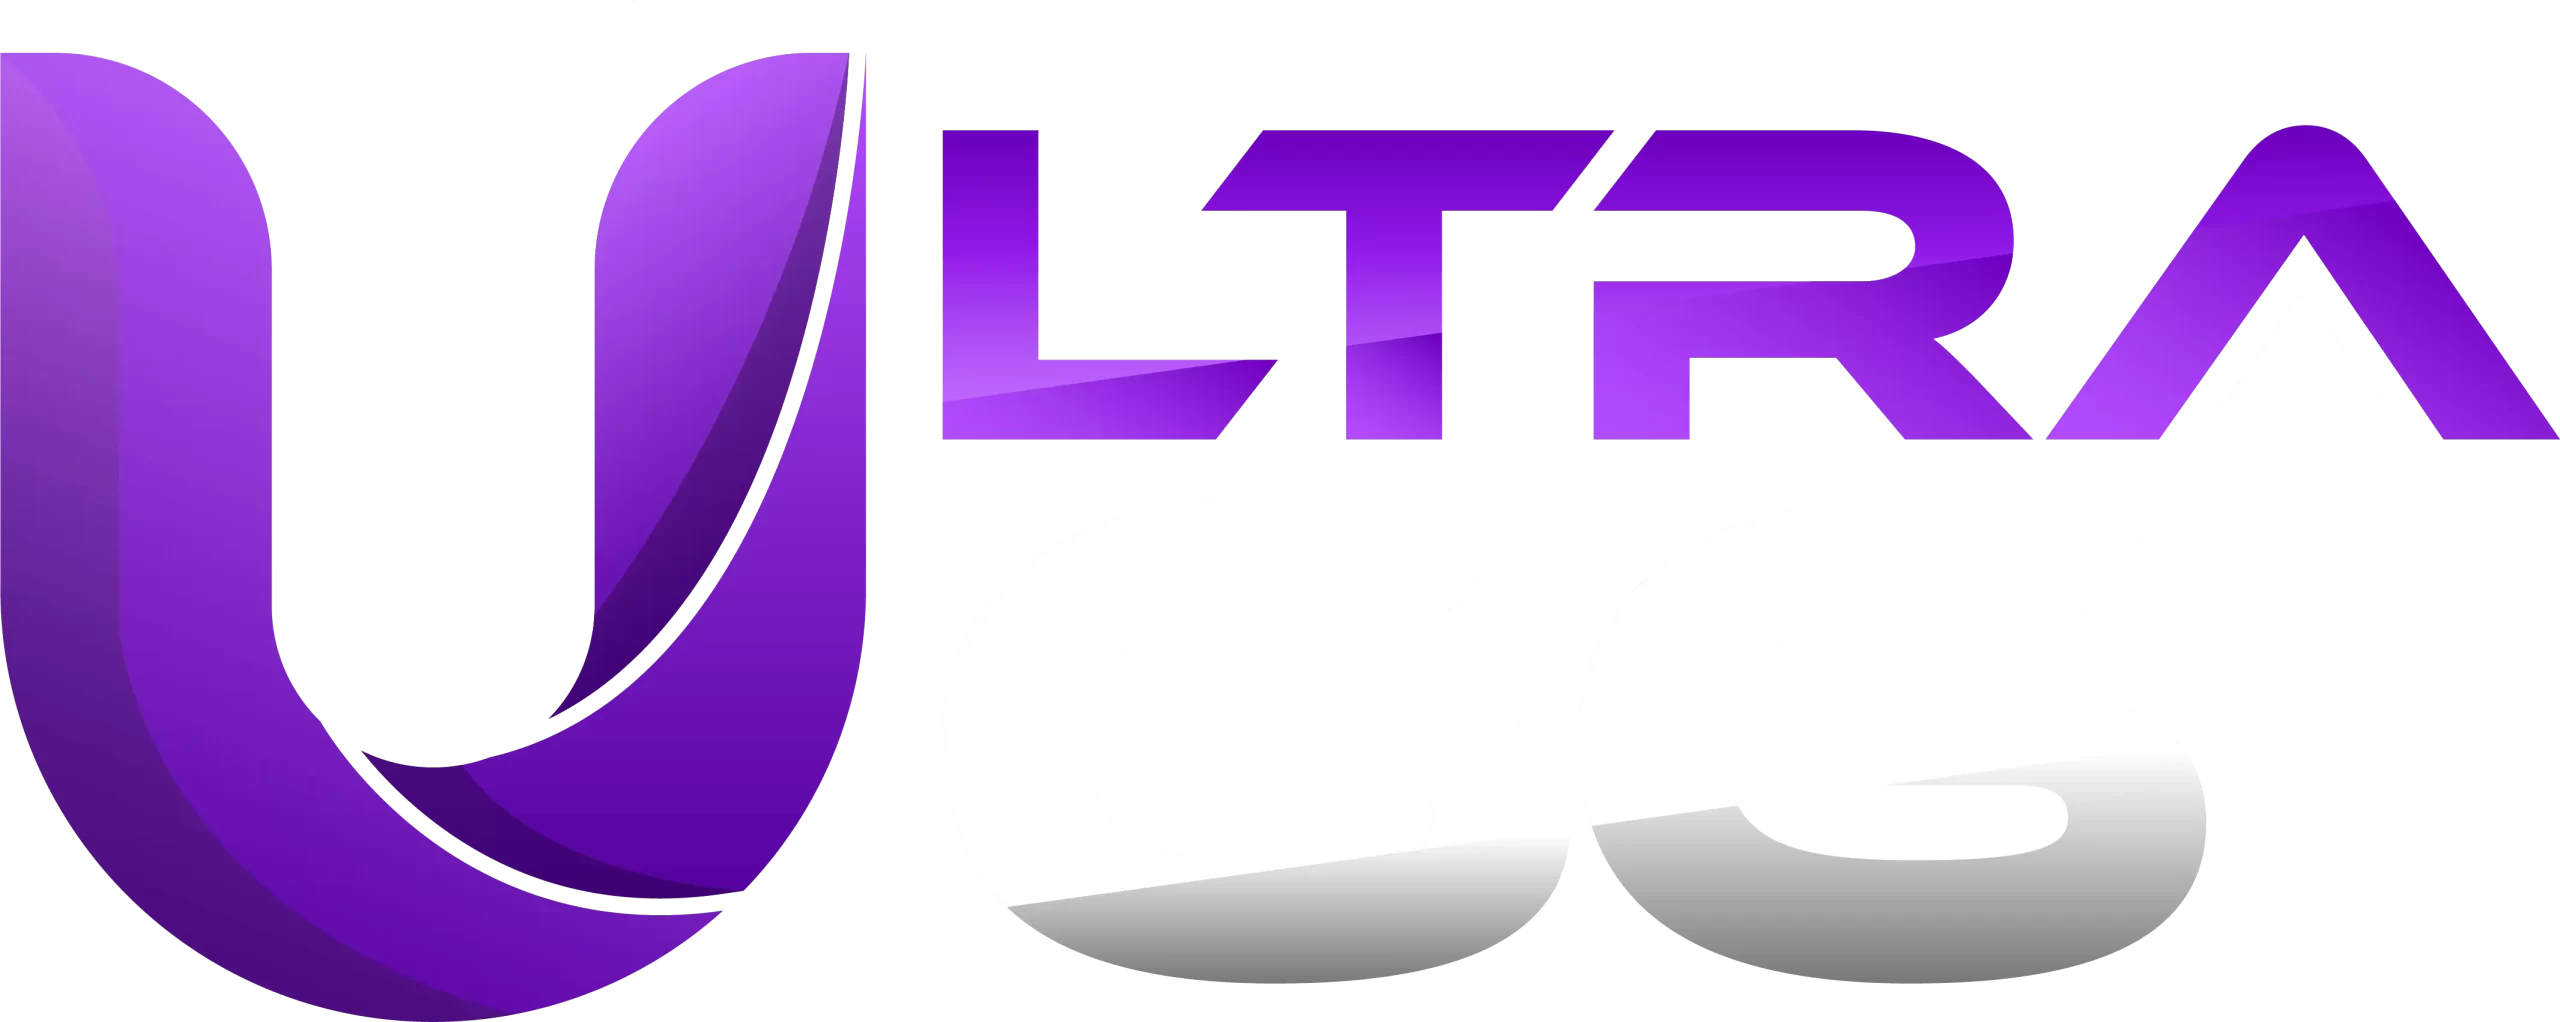 ultra66